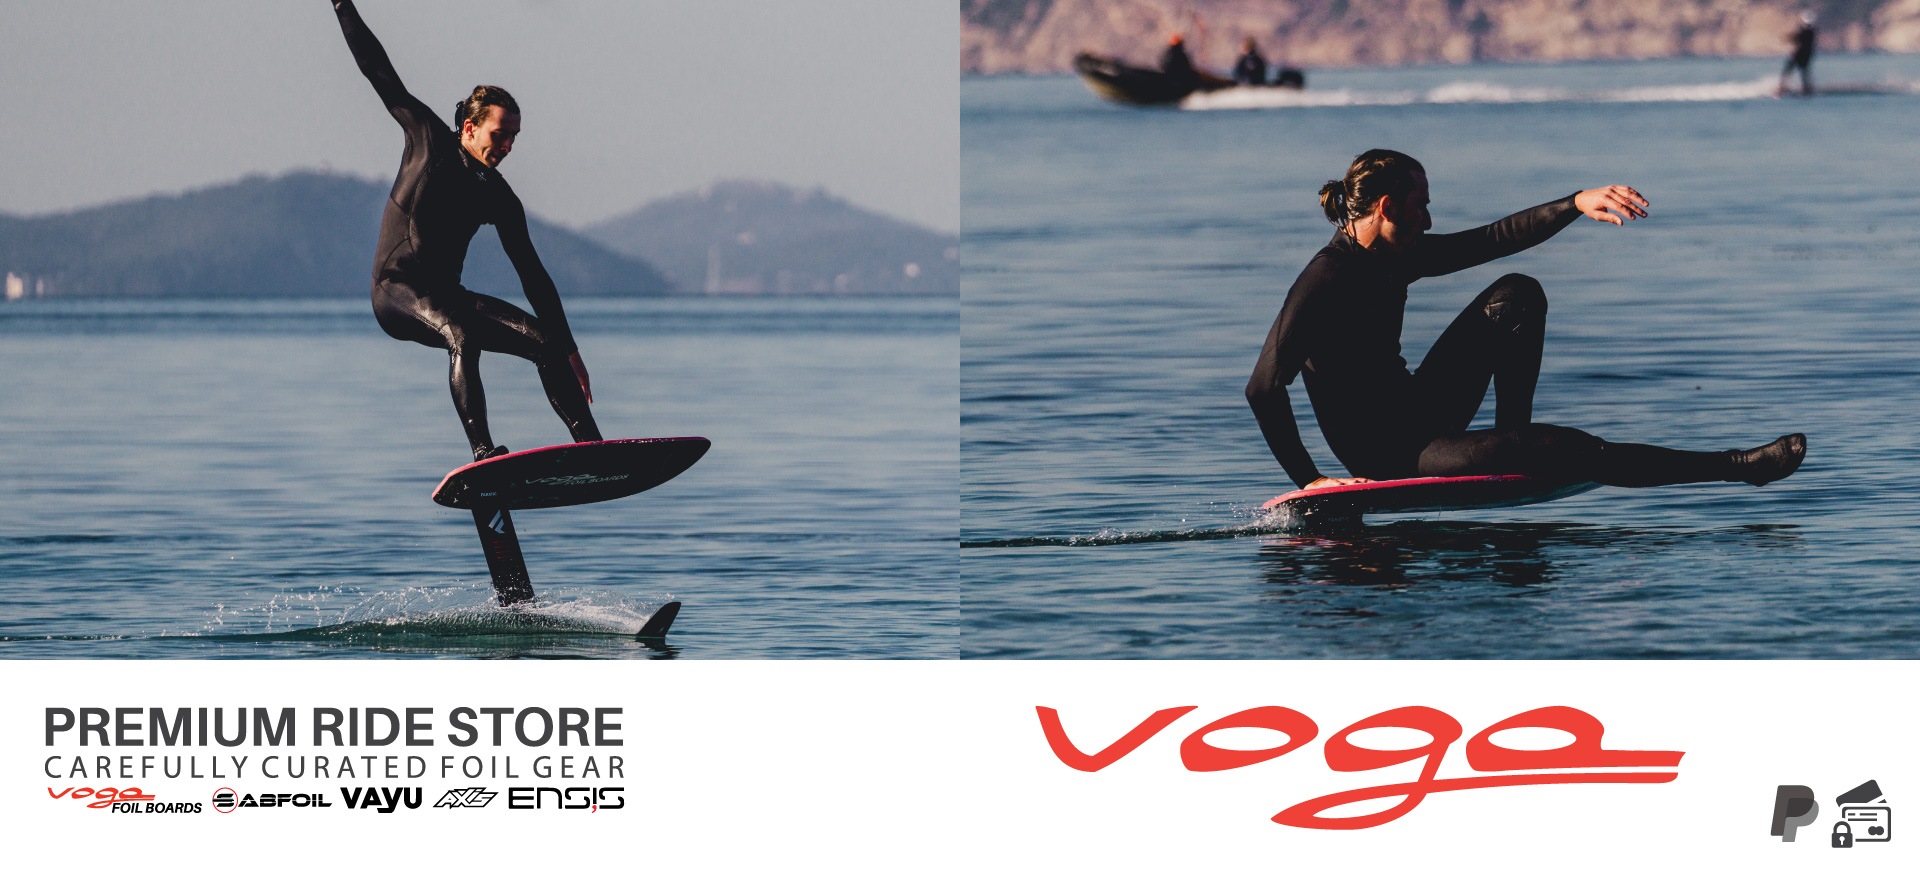 Voga Premium Ride Store pump foil boards for dock foil voga marine